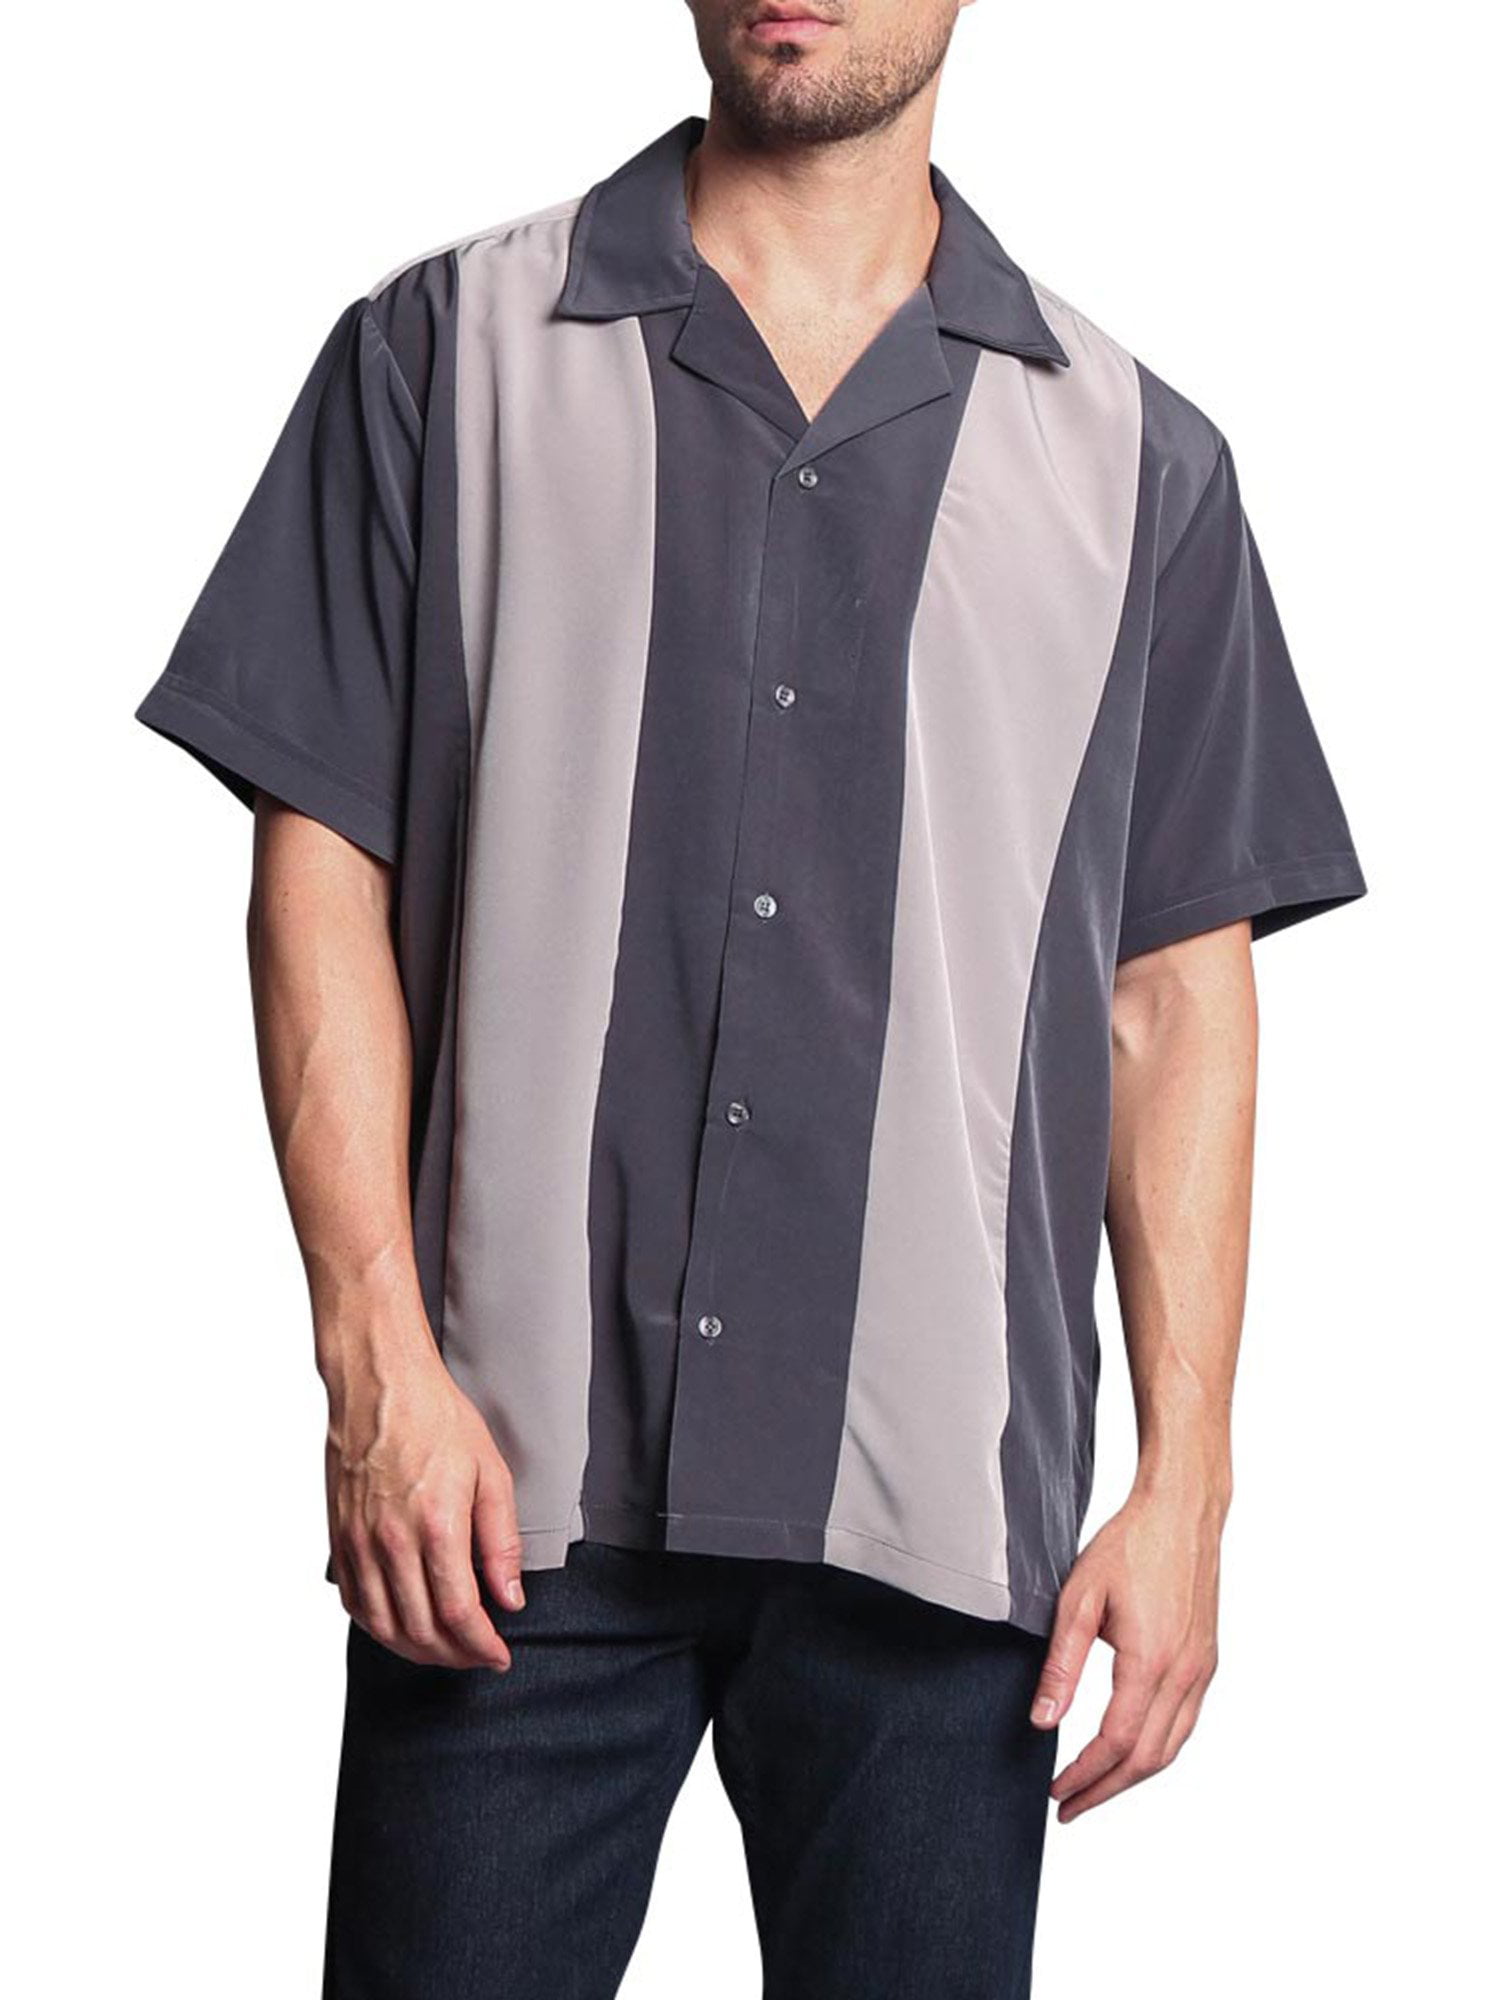 YIhujiuben Mens Fashion Shirt Elastic Casual Solid Long Sleeve Button Down Shirts